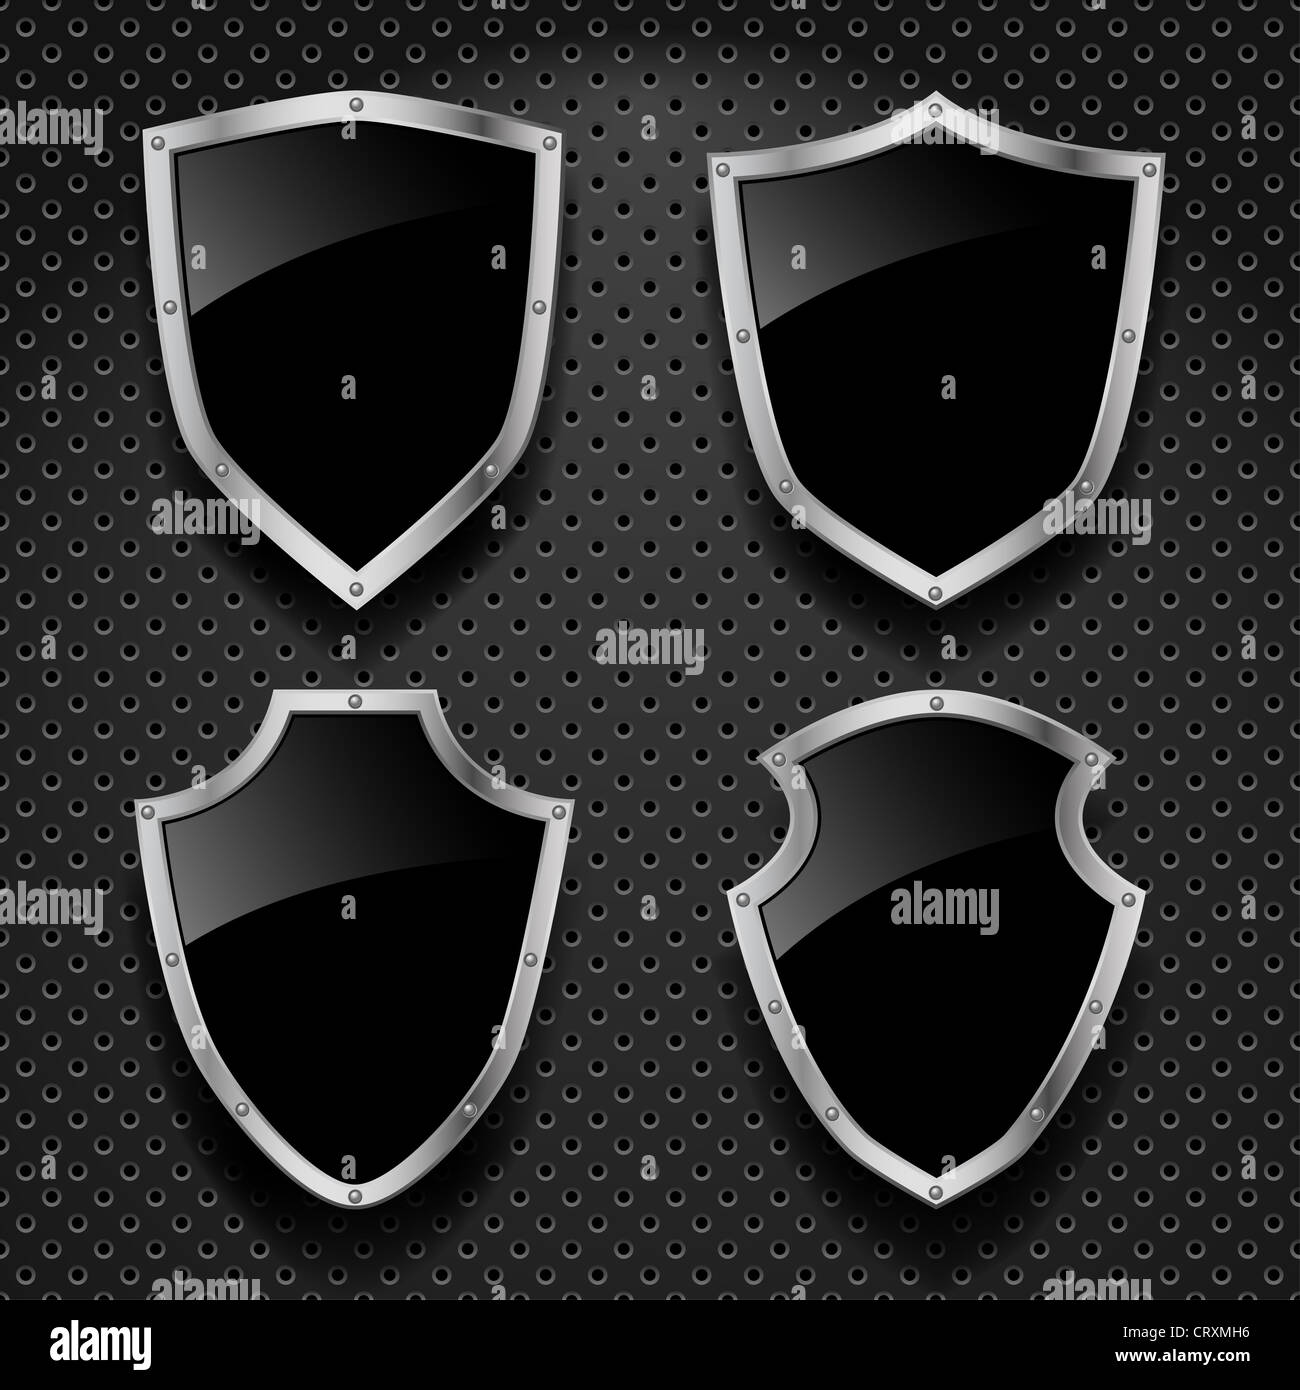 Vector set of black shields on metallic background Stock Photo